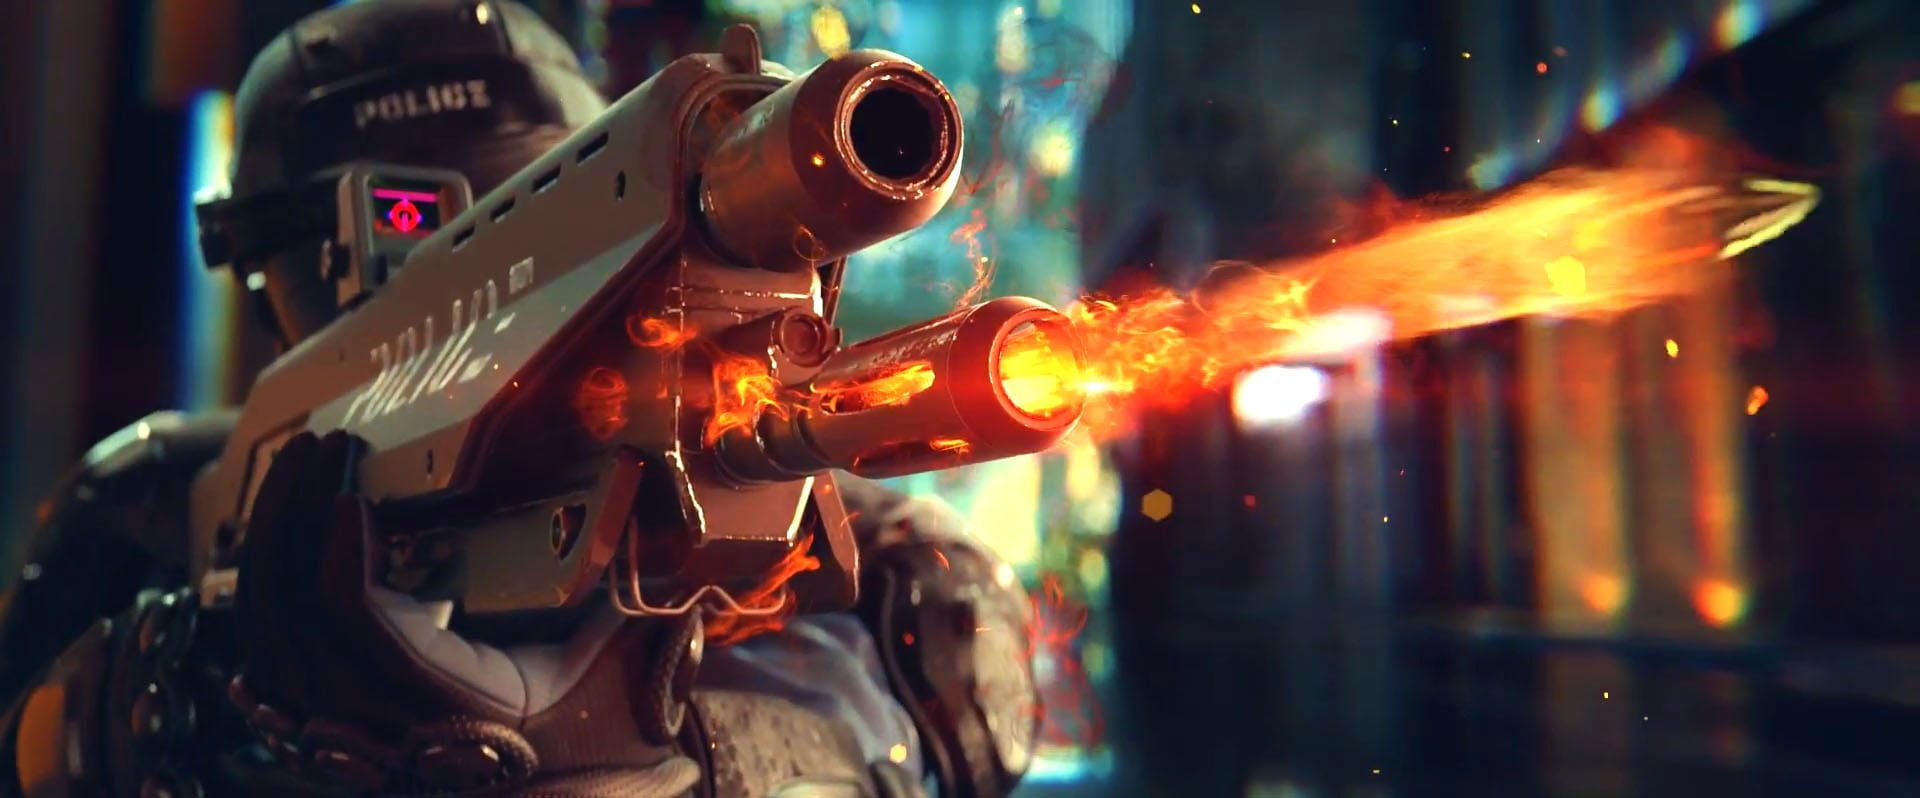 CGI wallpaper, gun, Cyberpunk 2077, weapon, video games, machine gun